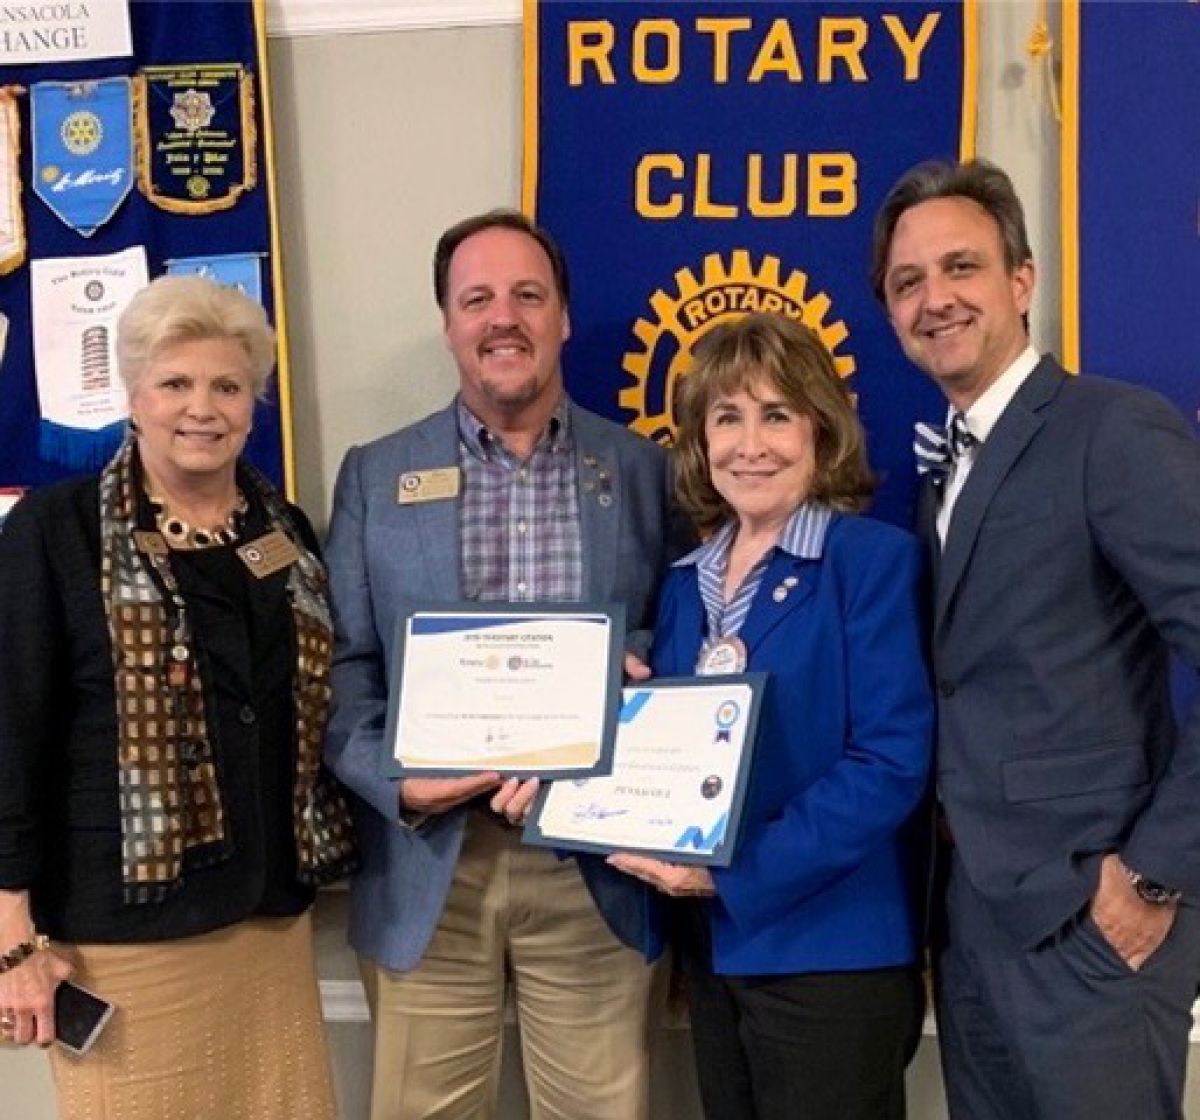 Rotary Club members receiving an award